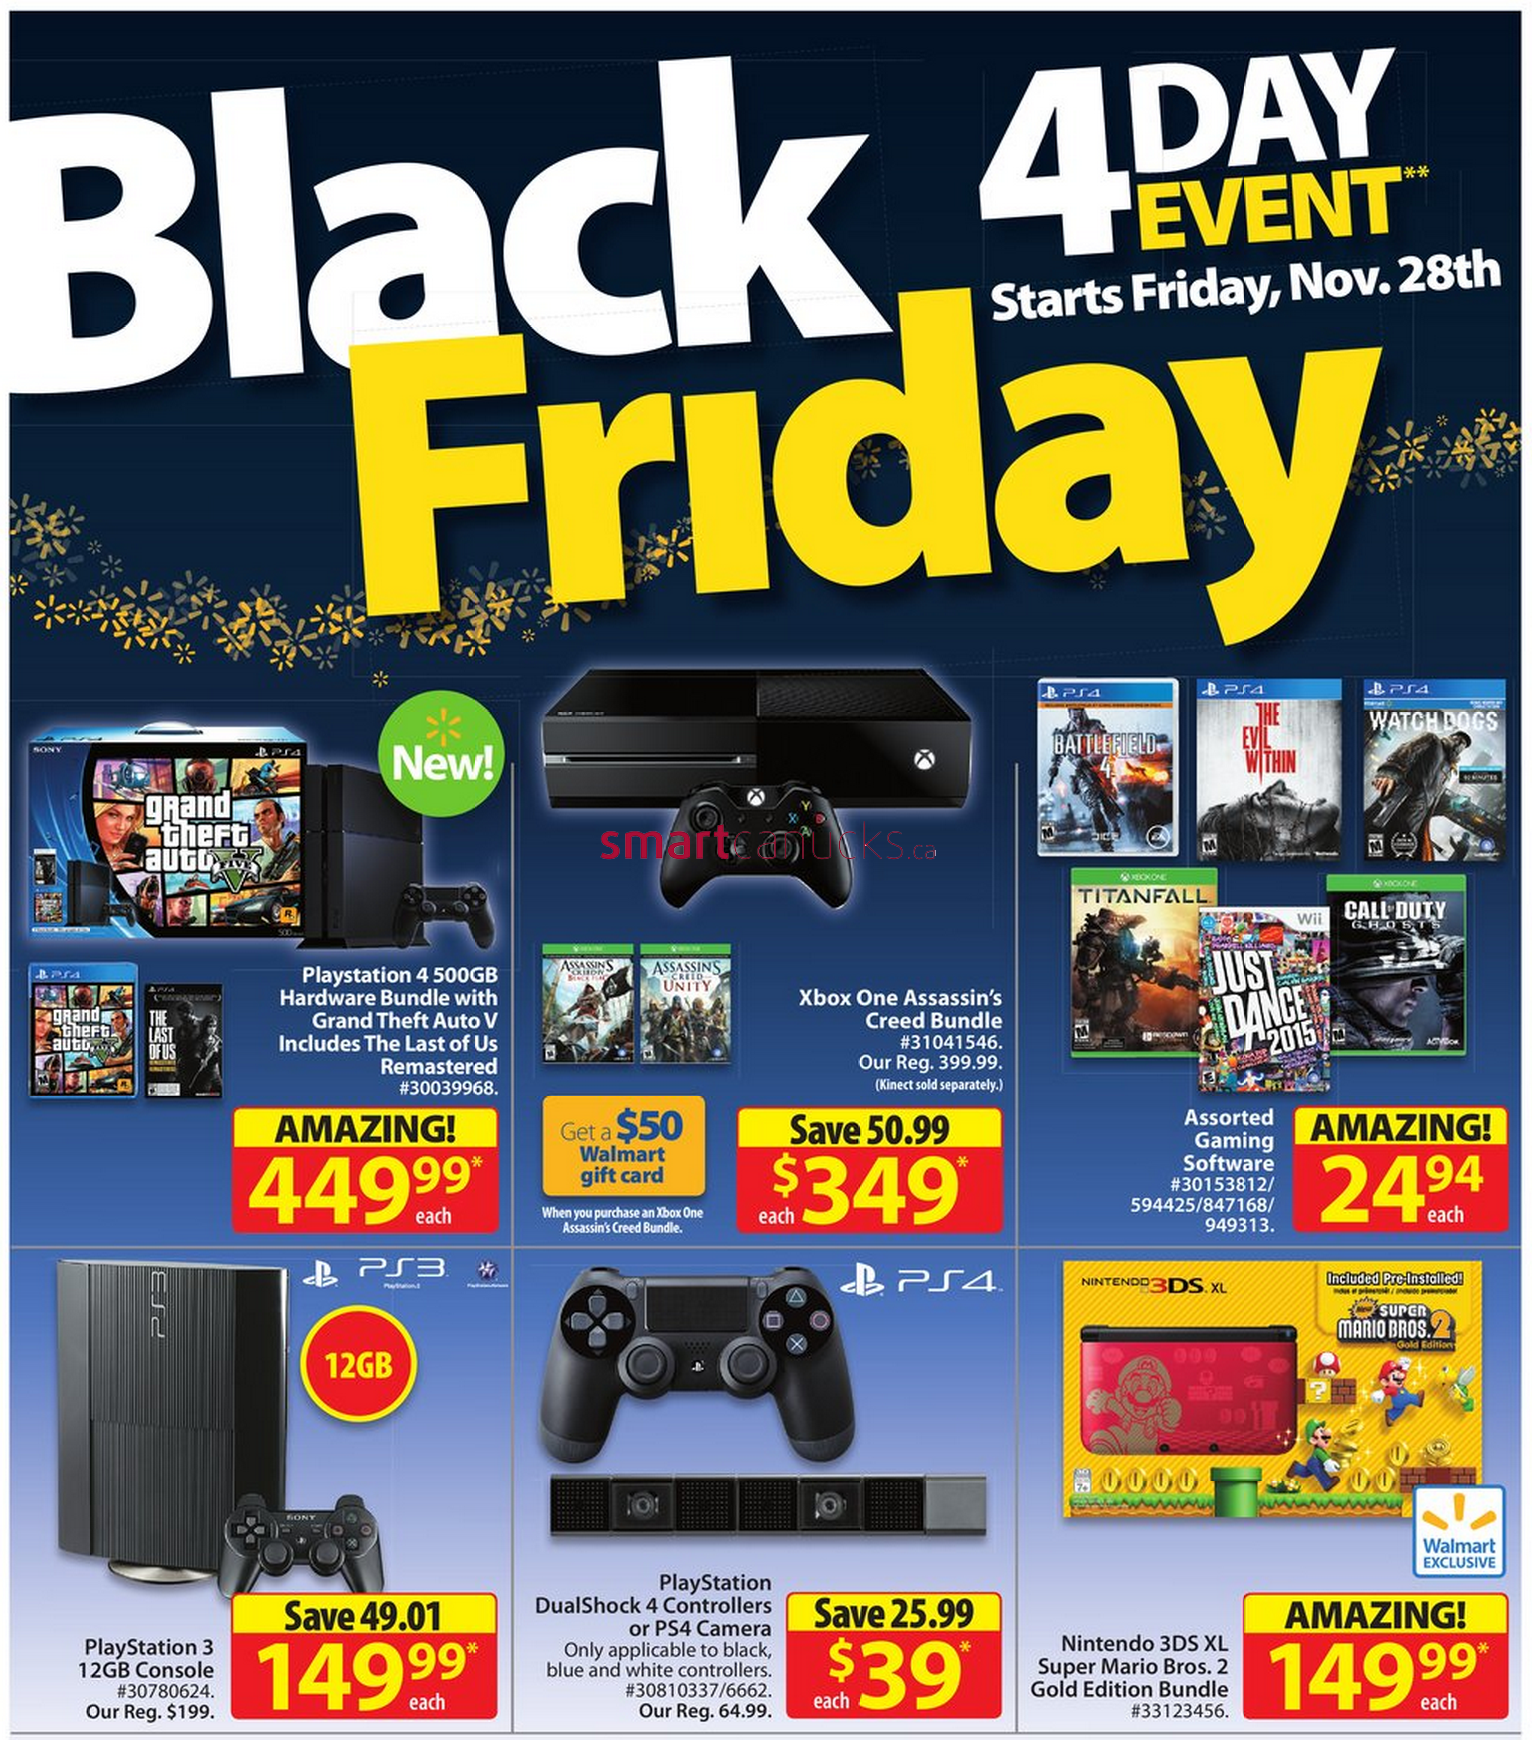 Walmart Canada Black Friday Flyer 2014 Sales Deals Nov 28 Dec 1 10.33